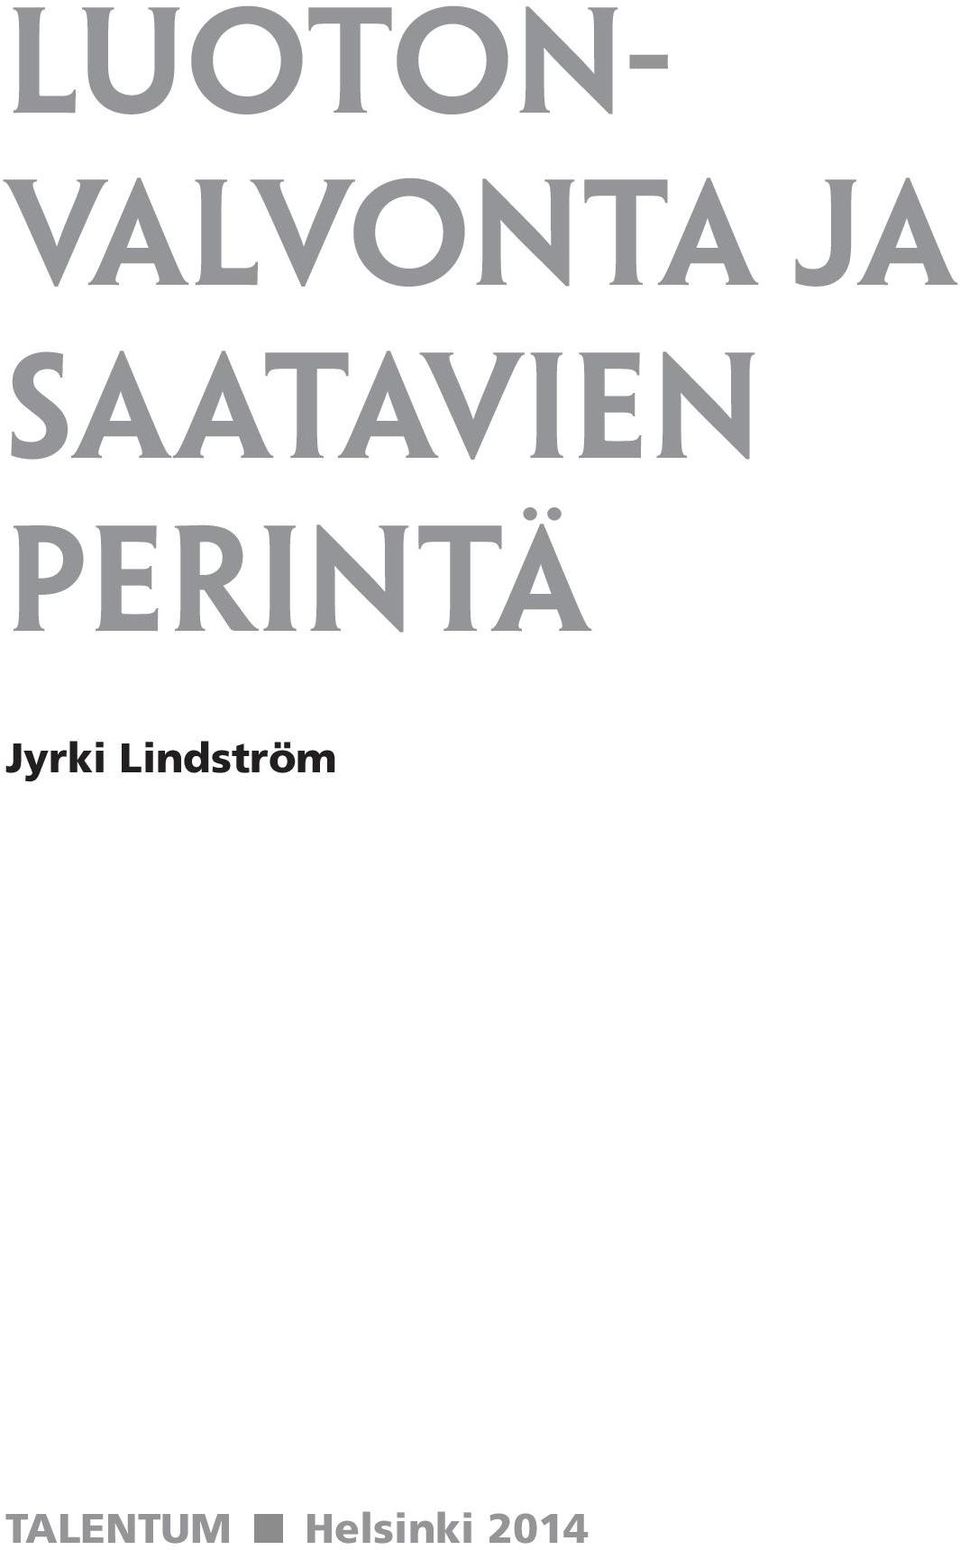 Jyrki Lindström